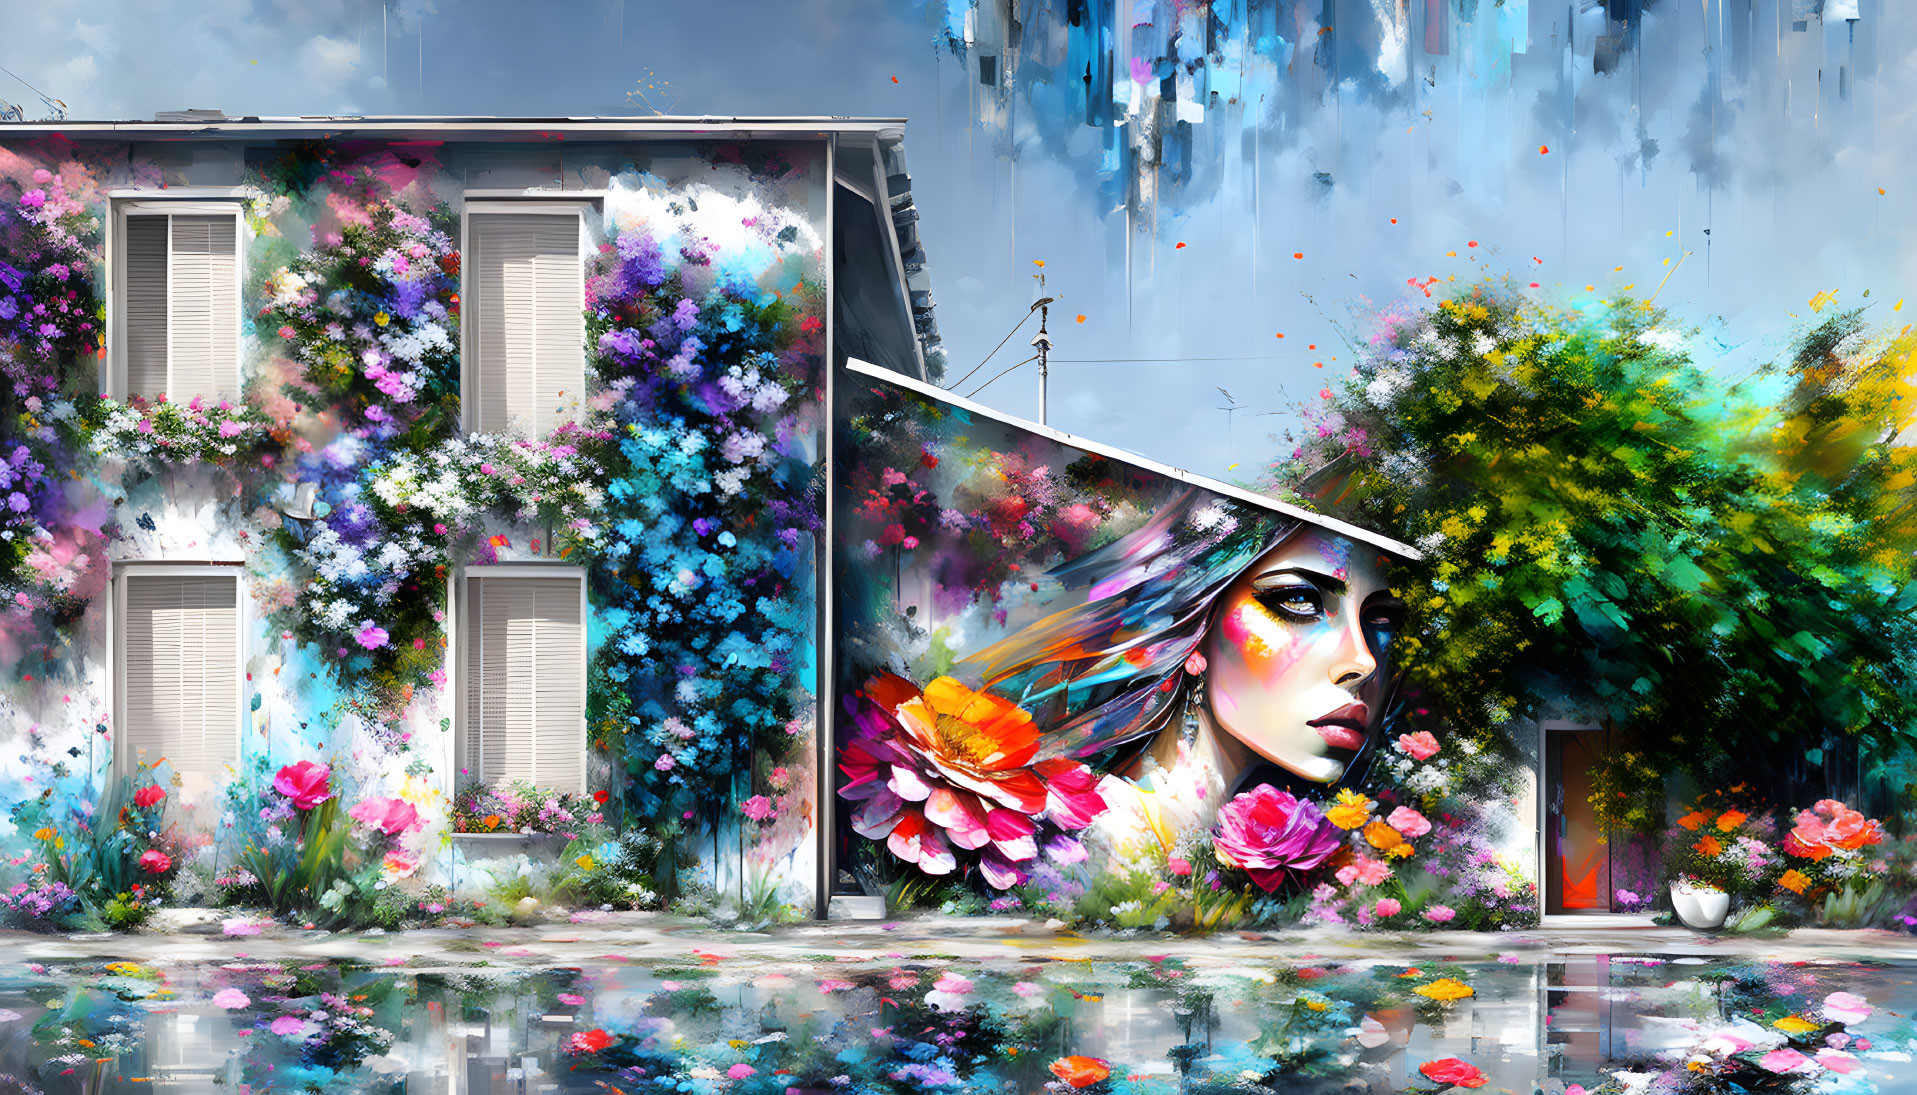 Colorful digital artwork: traditional house, flowers, surreal woman portrait